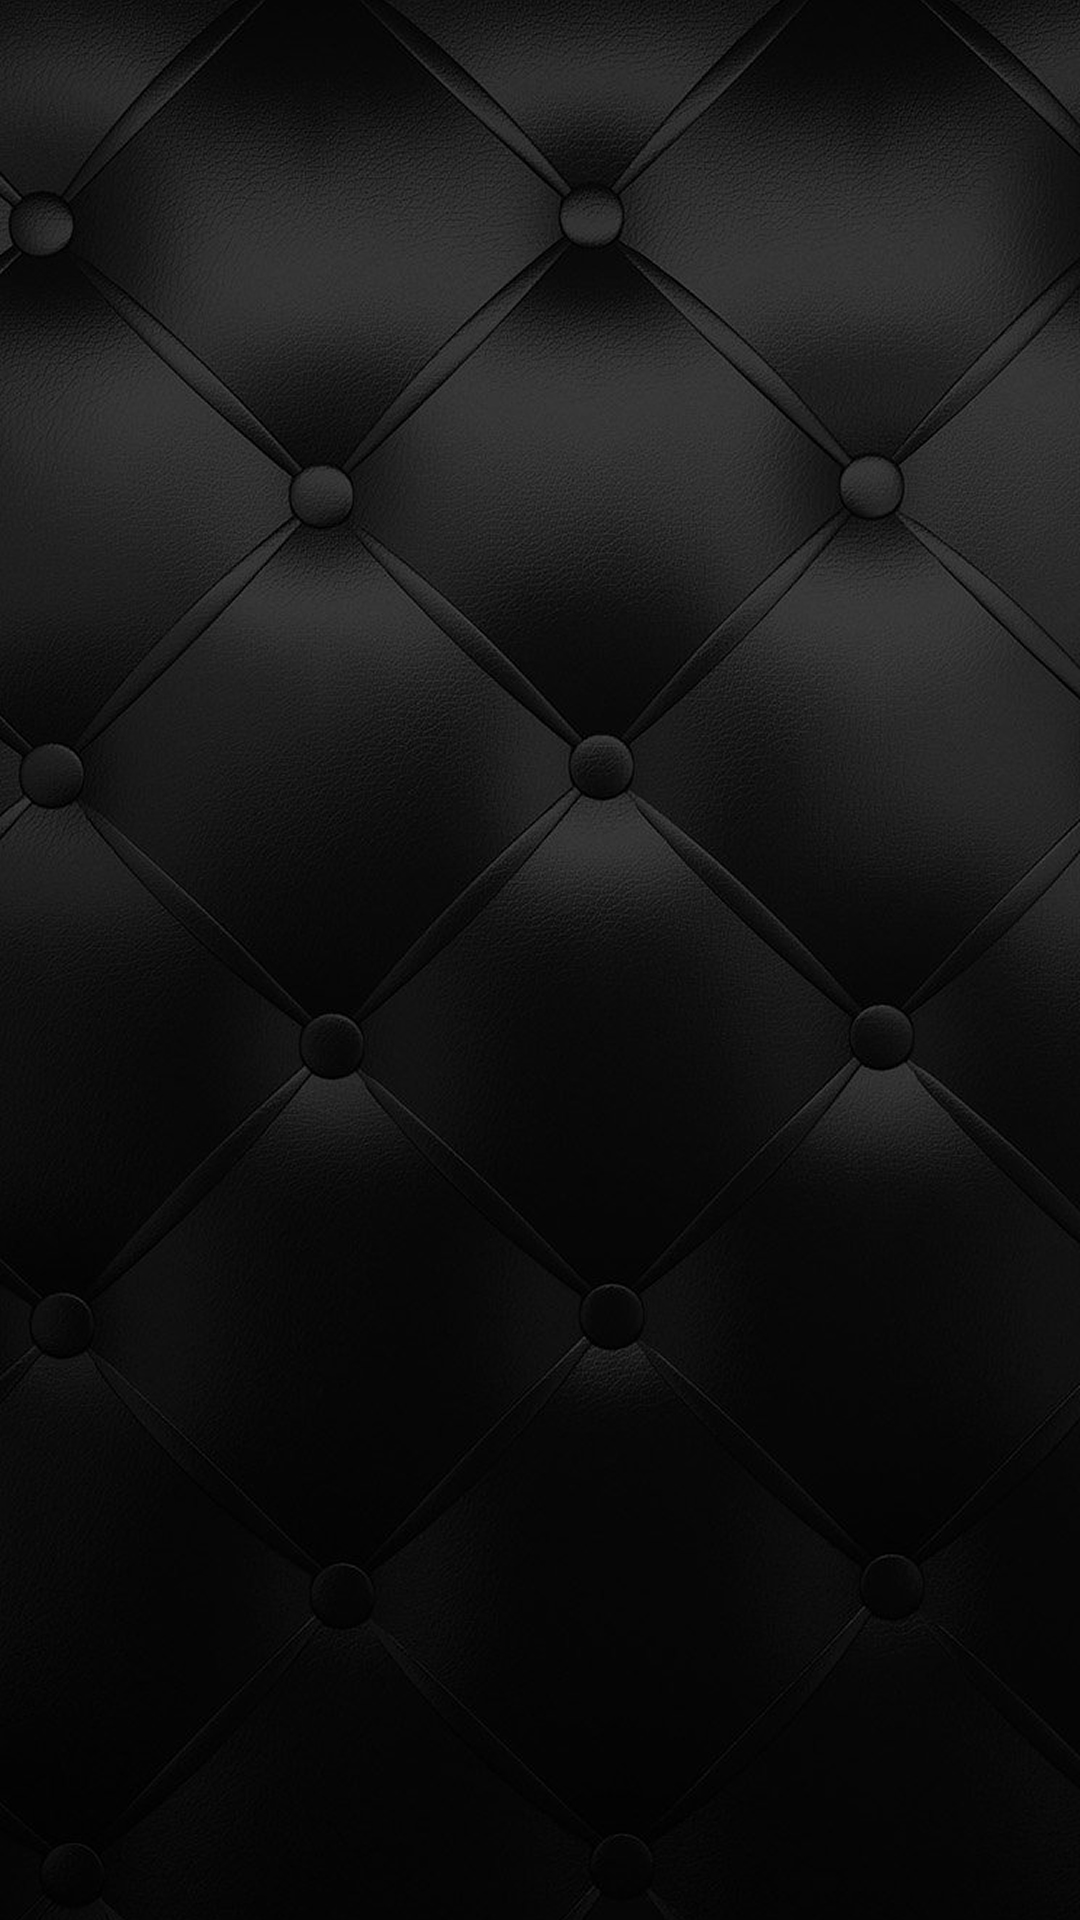 Black Texture Pattern iPhone 6 Wallpaper Download iPhone Wallpapers